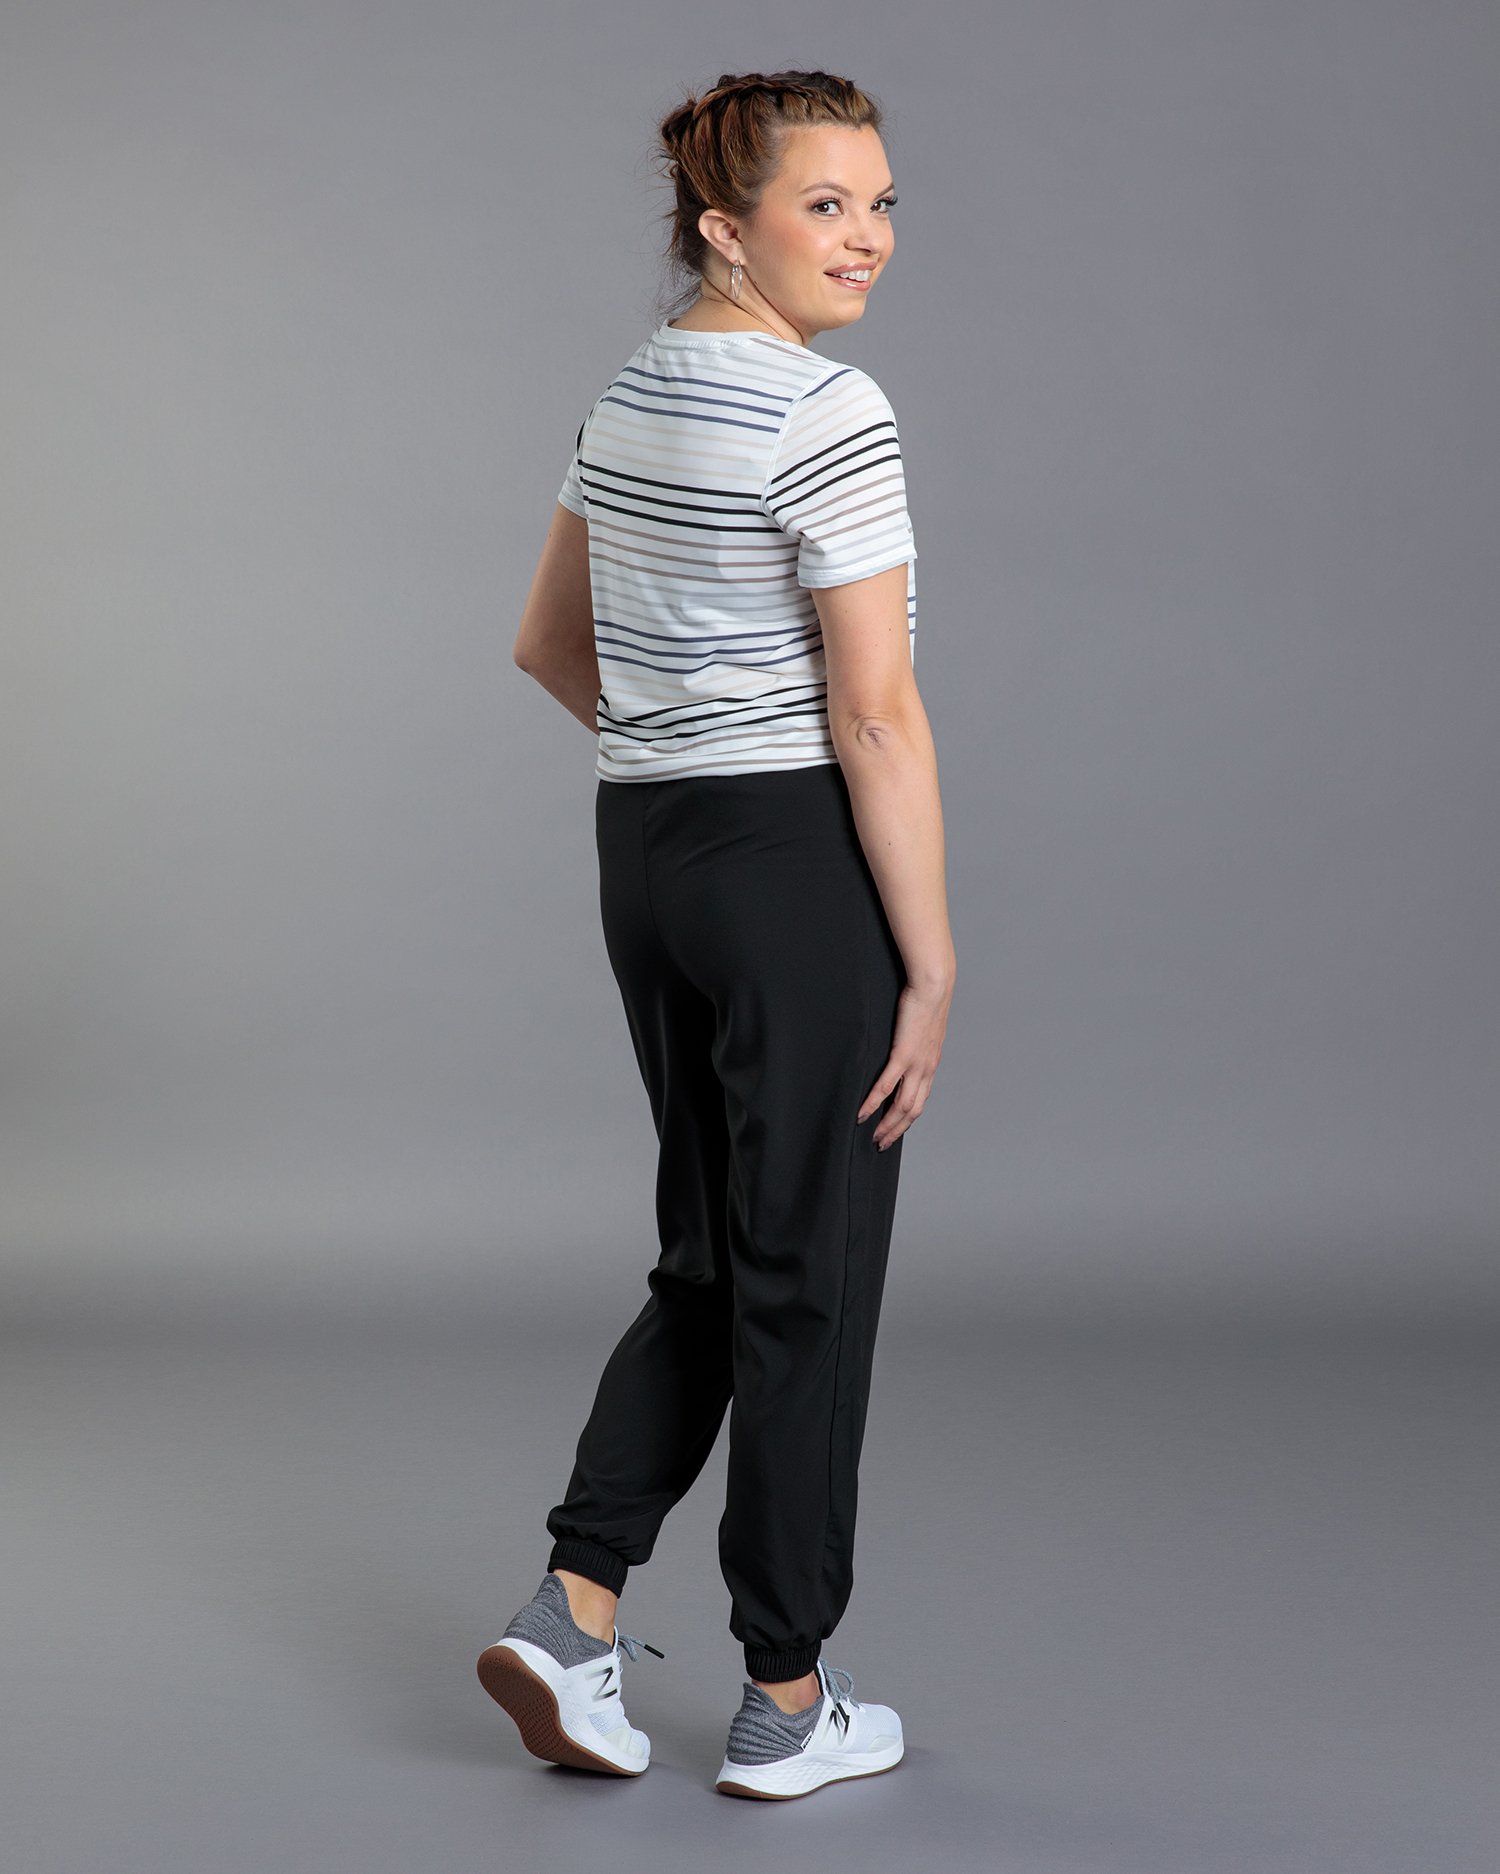 LuLaRoe Striped Athletic Pants for Women